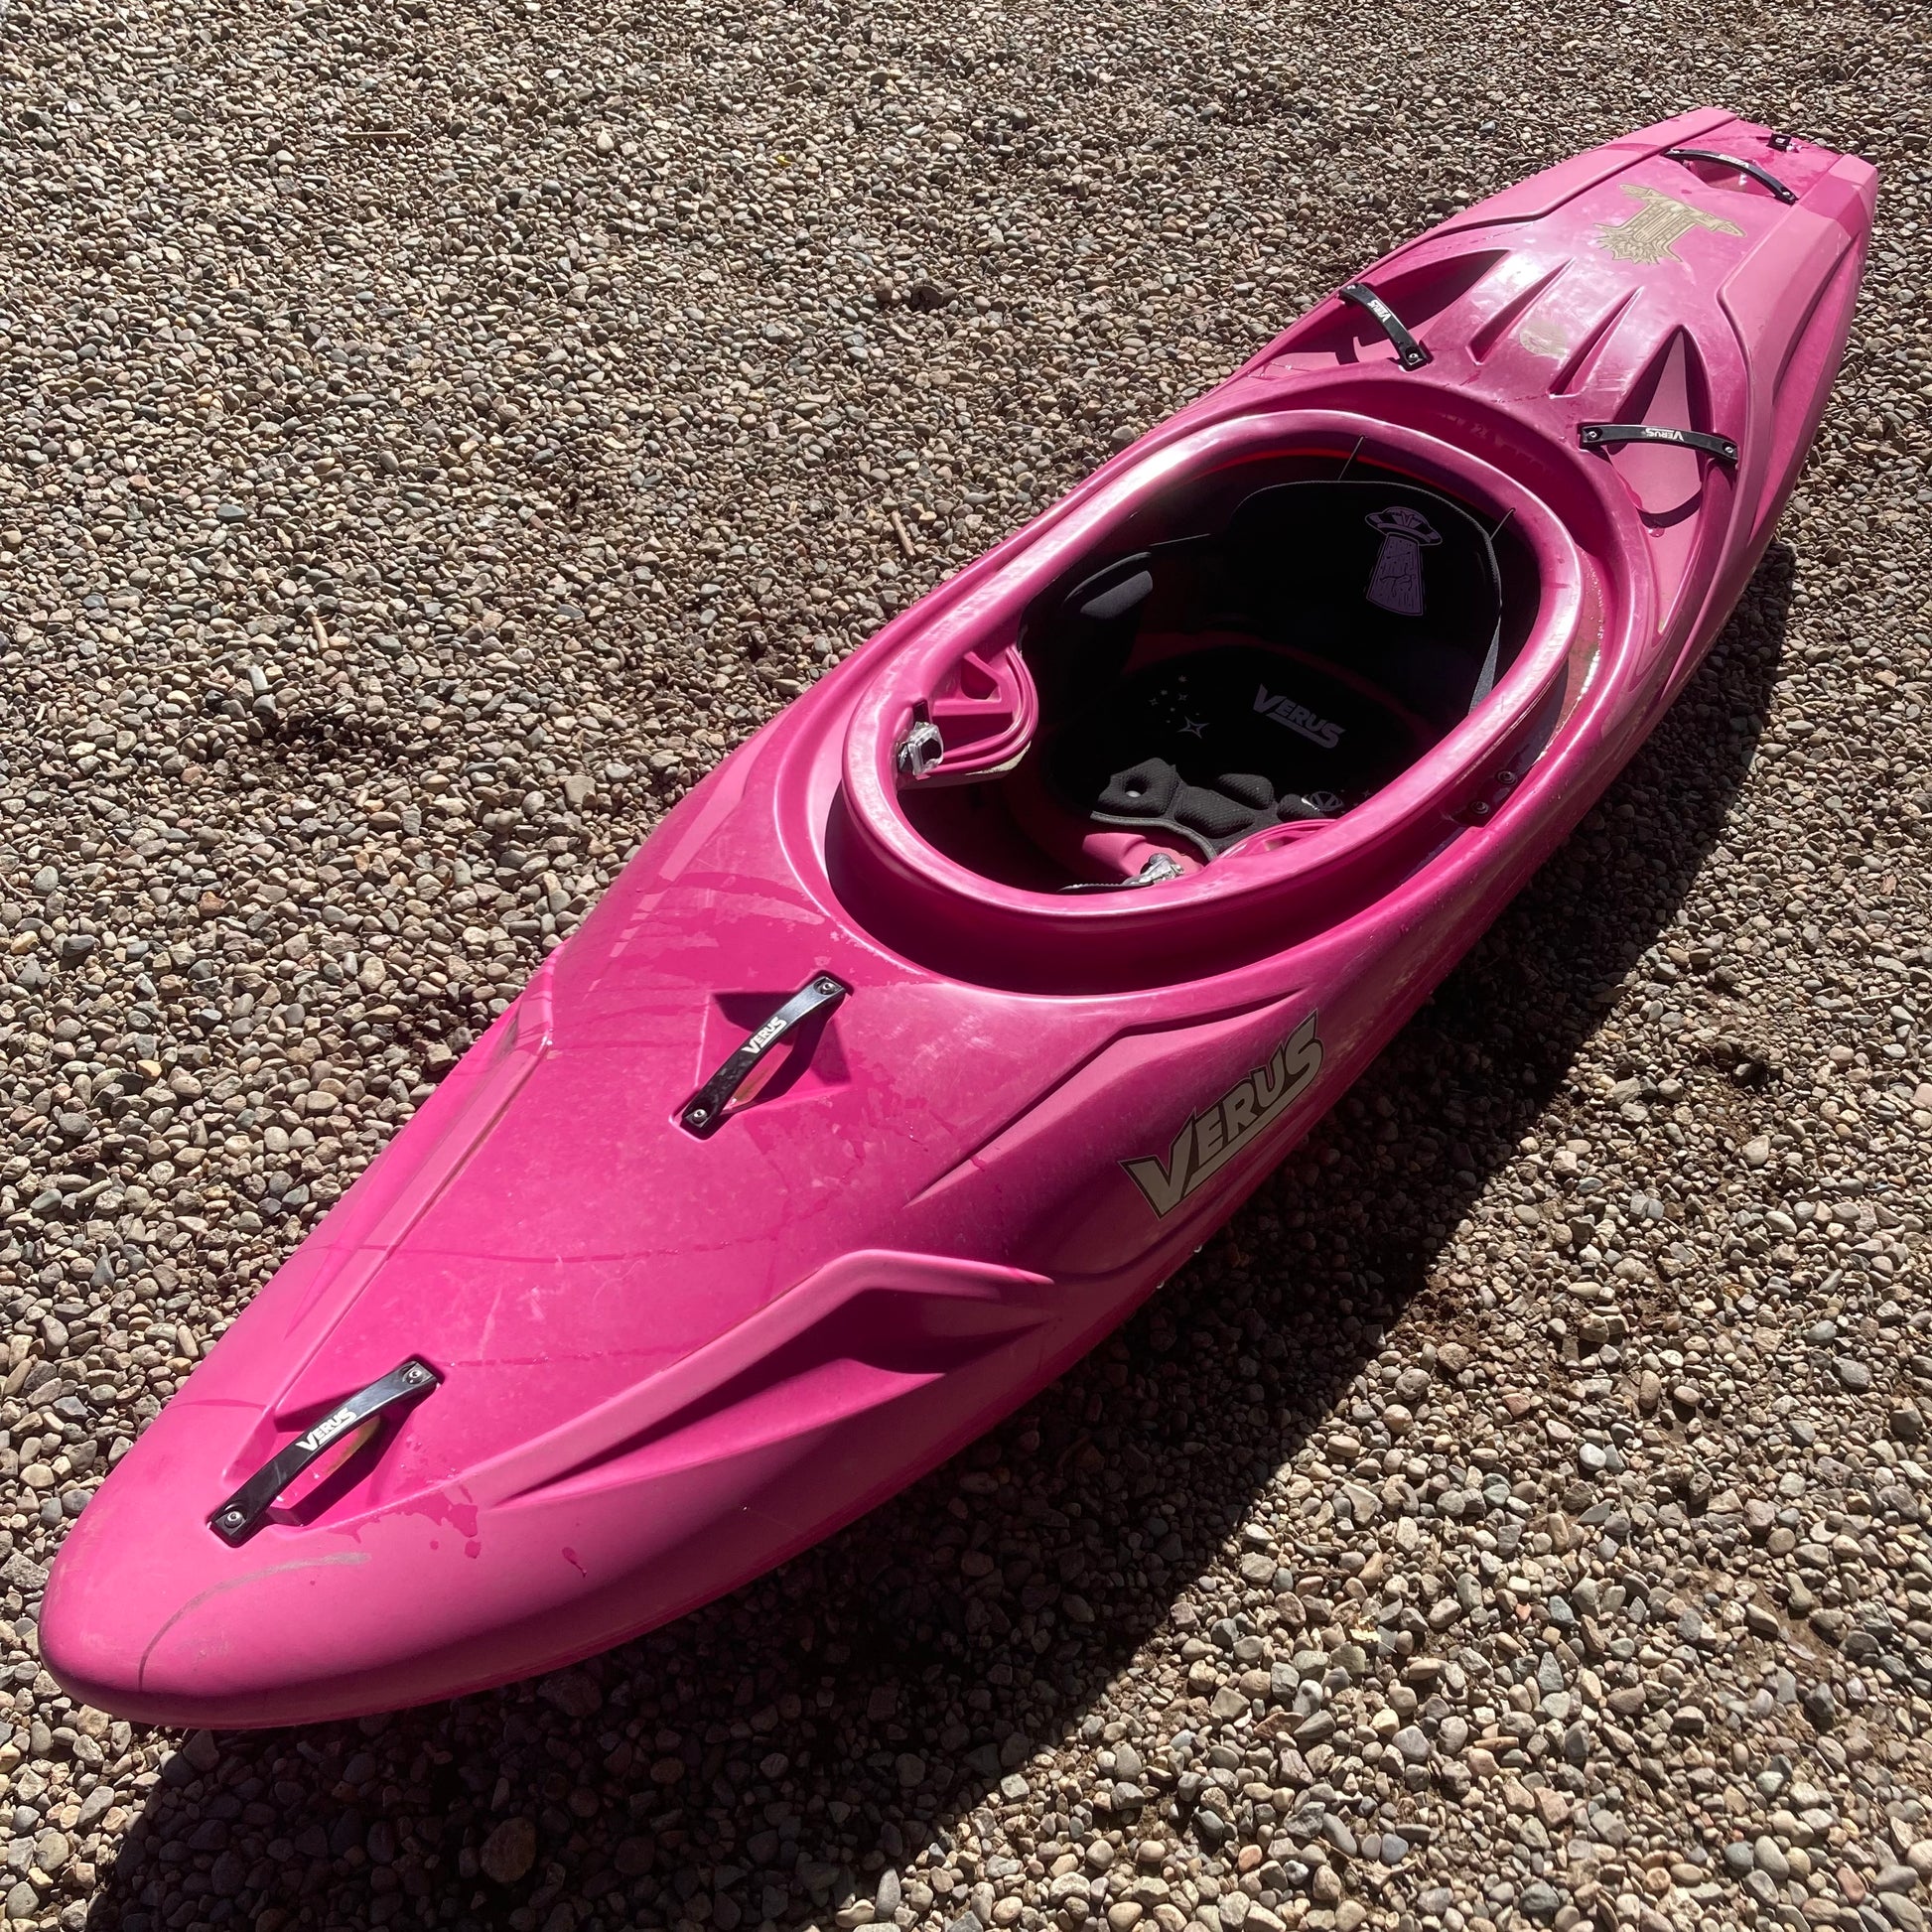 A pink Verus kayak laying on the ground.